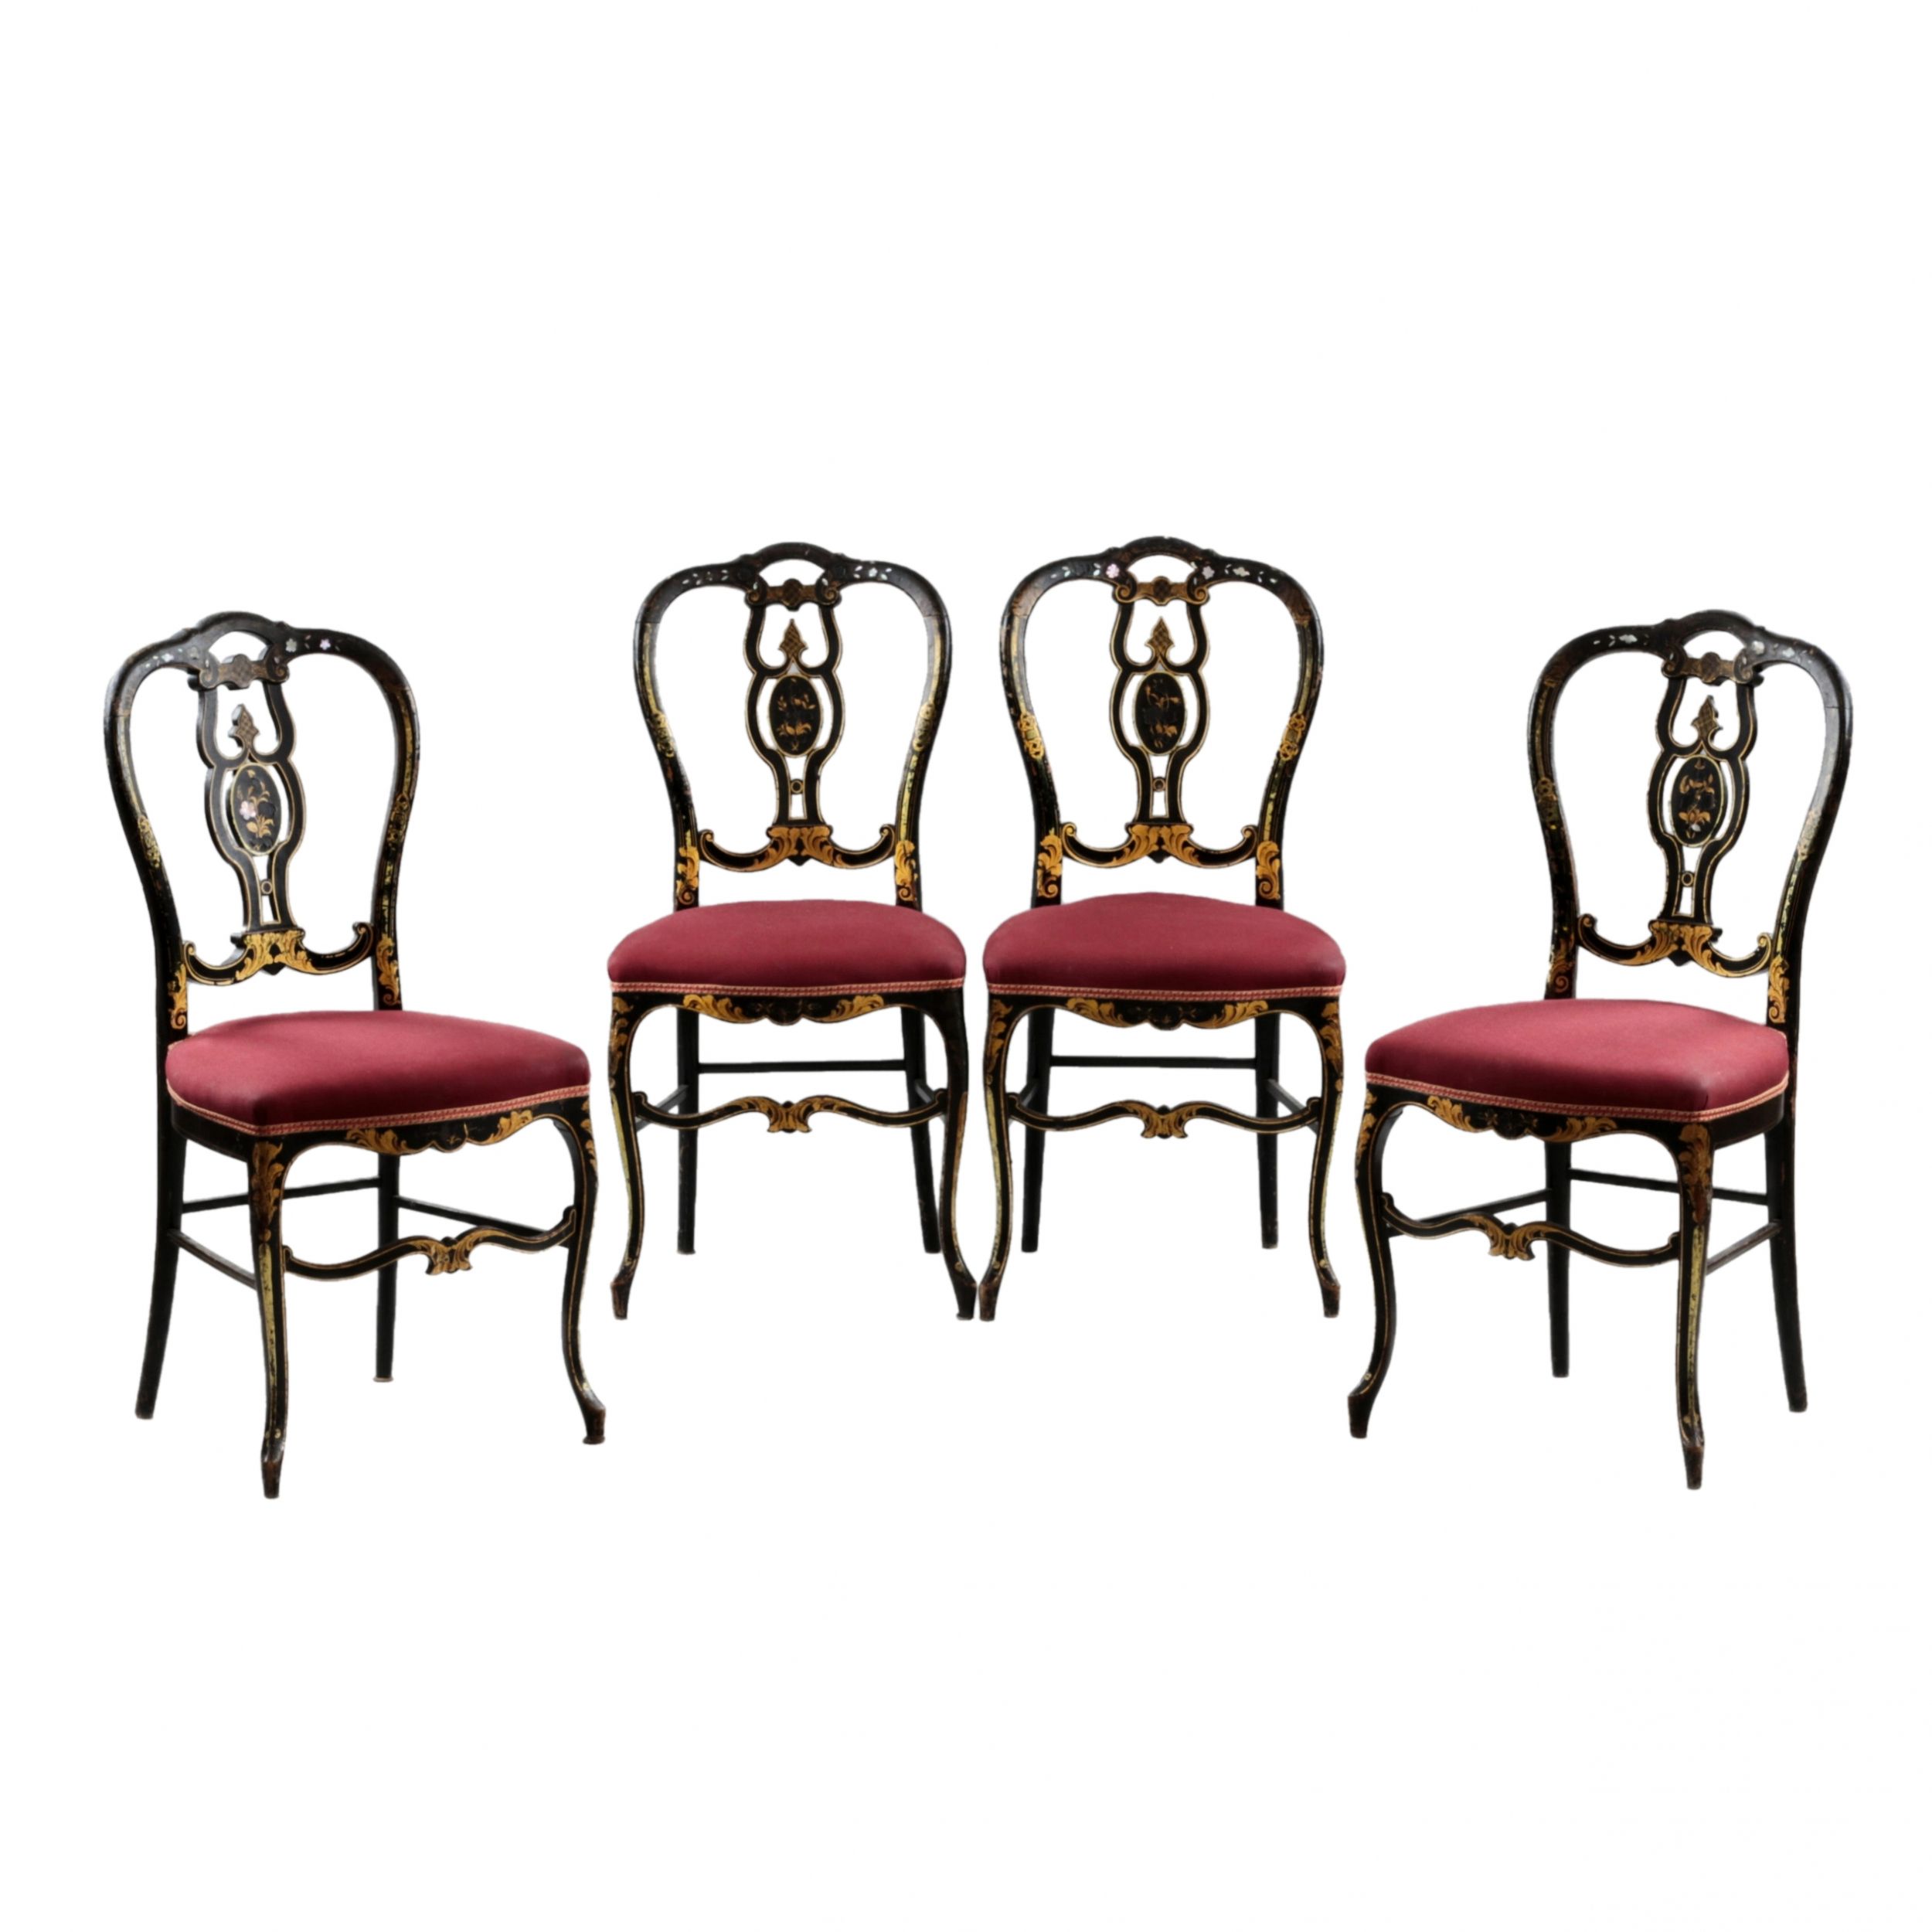 Four-Napoleon-III-style-chairs-